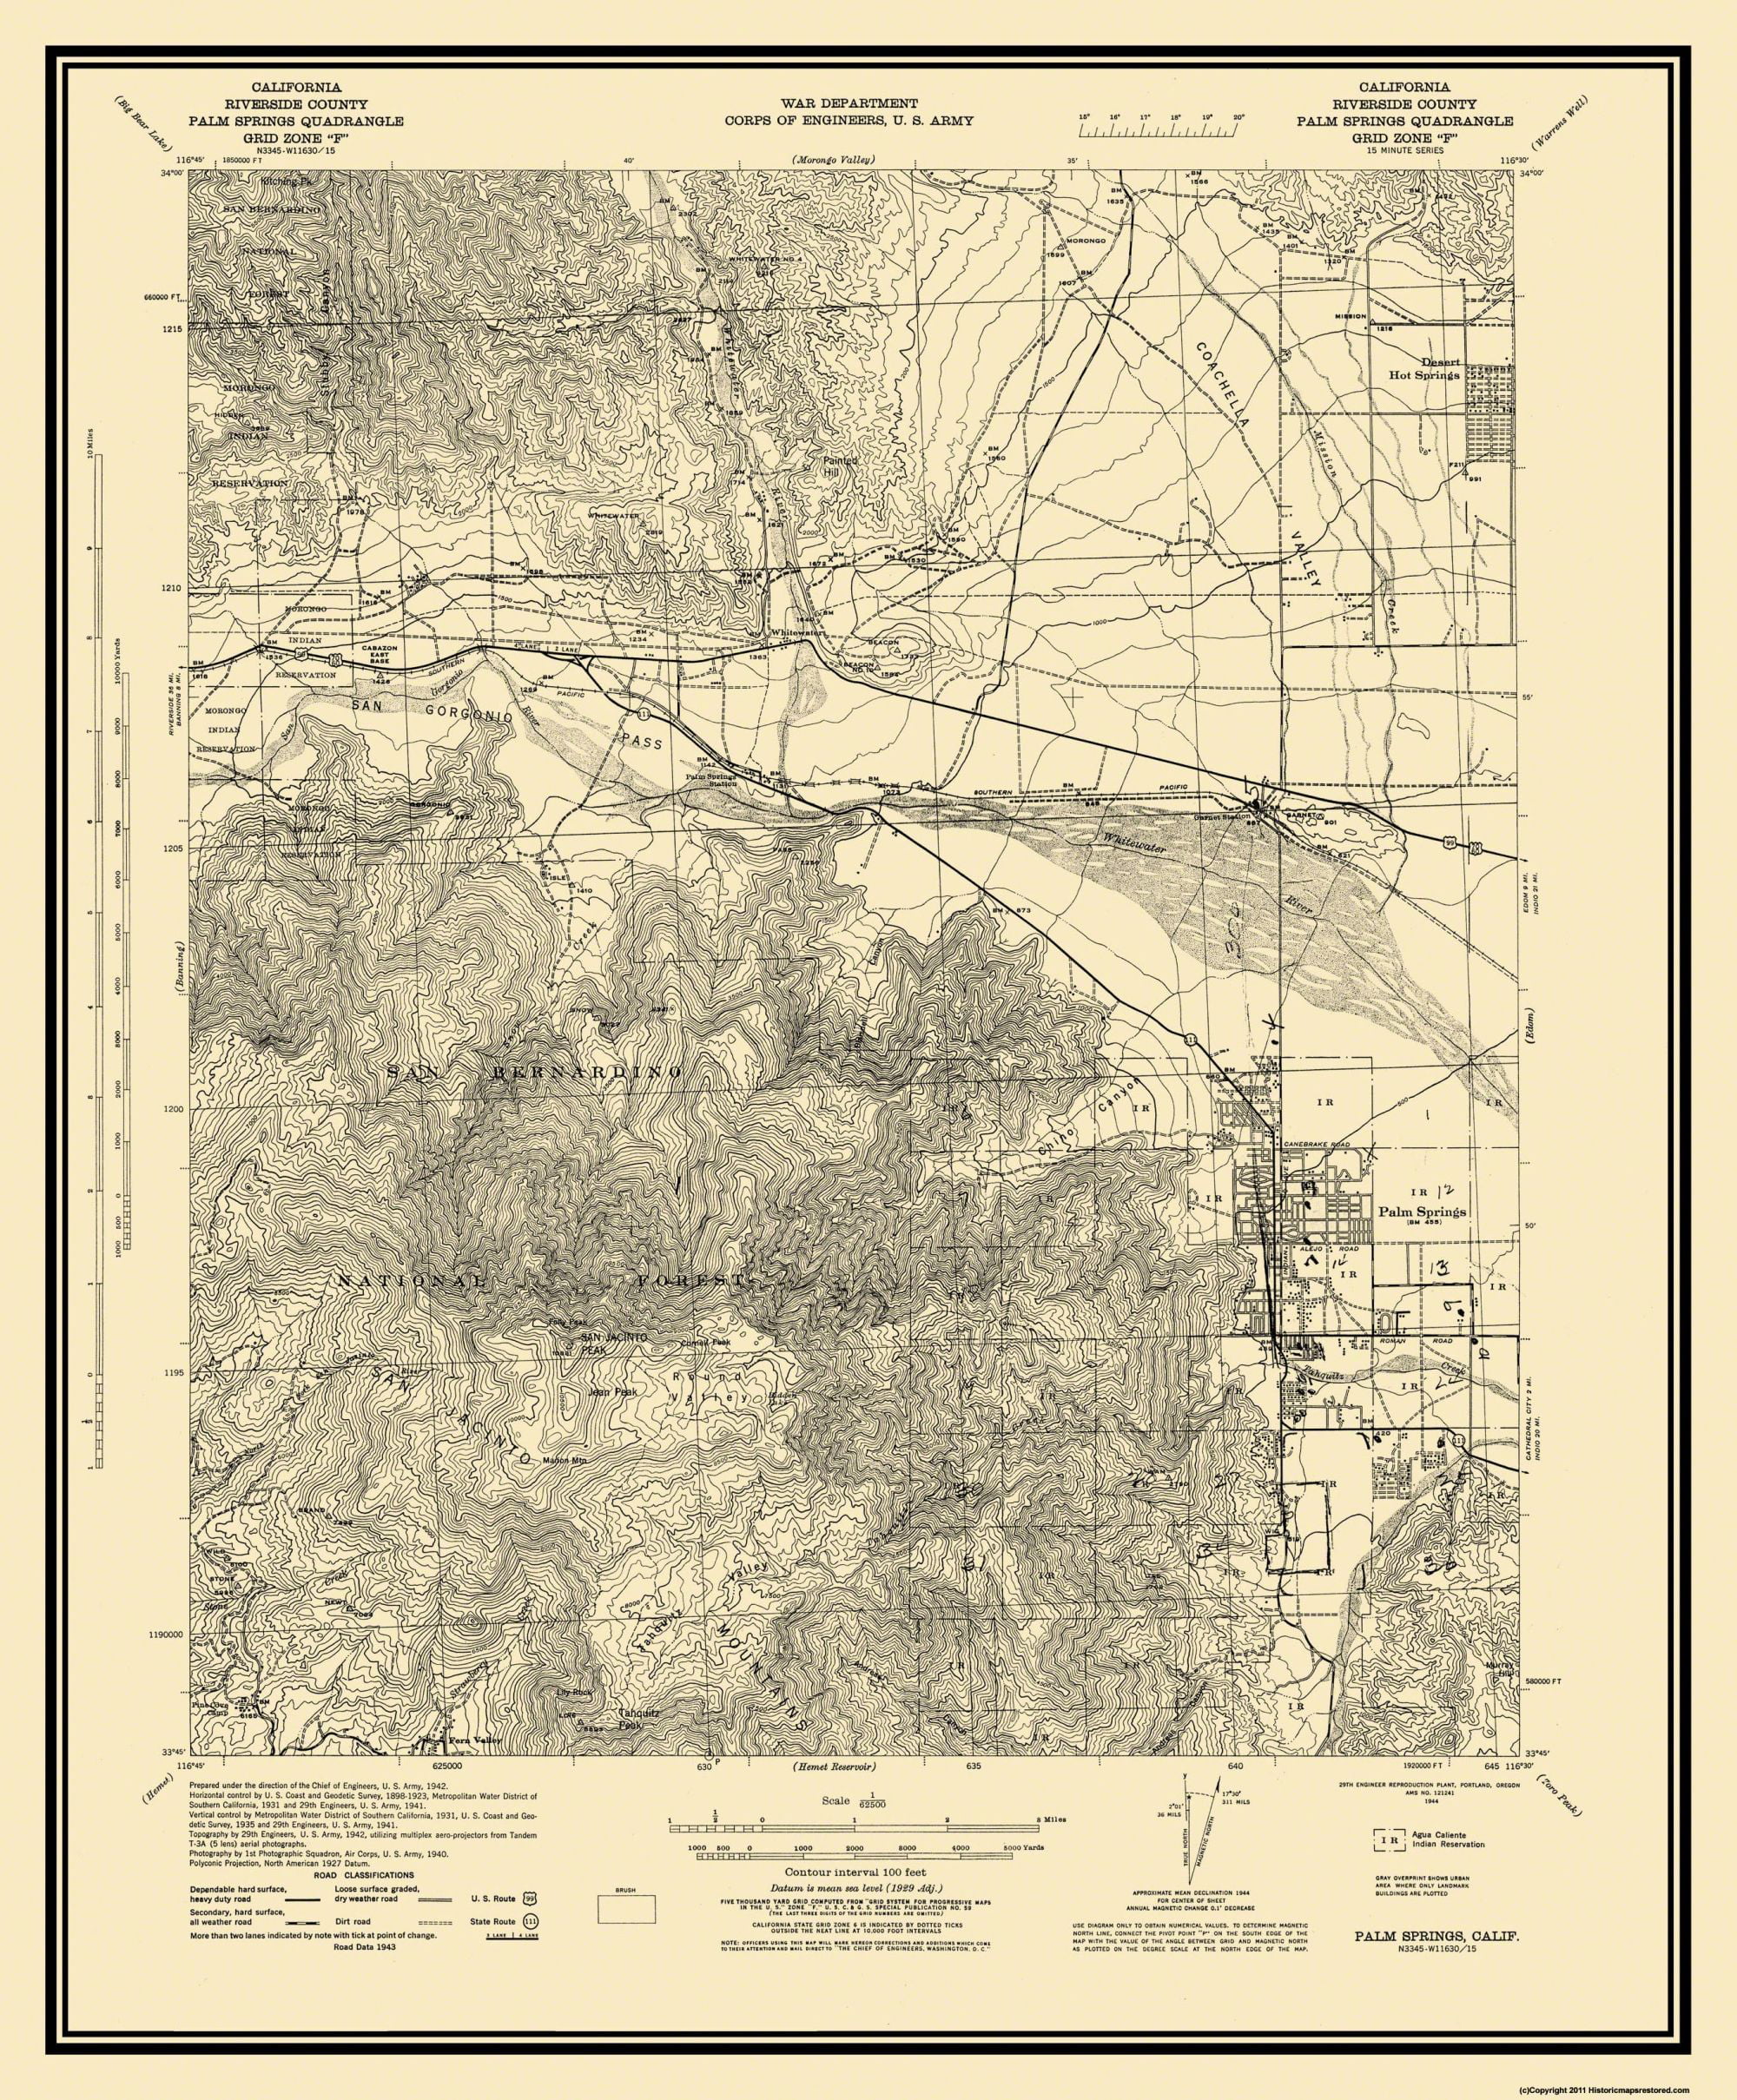 Palm Springs California Quad USGS 1928-23 x 27.8 